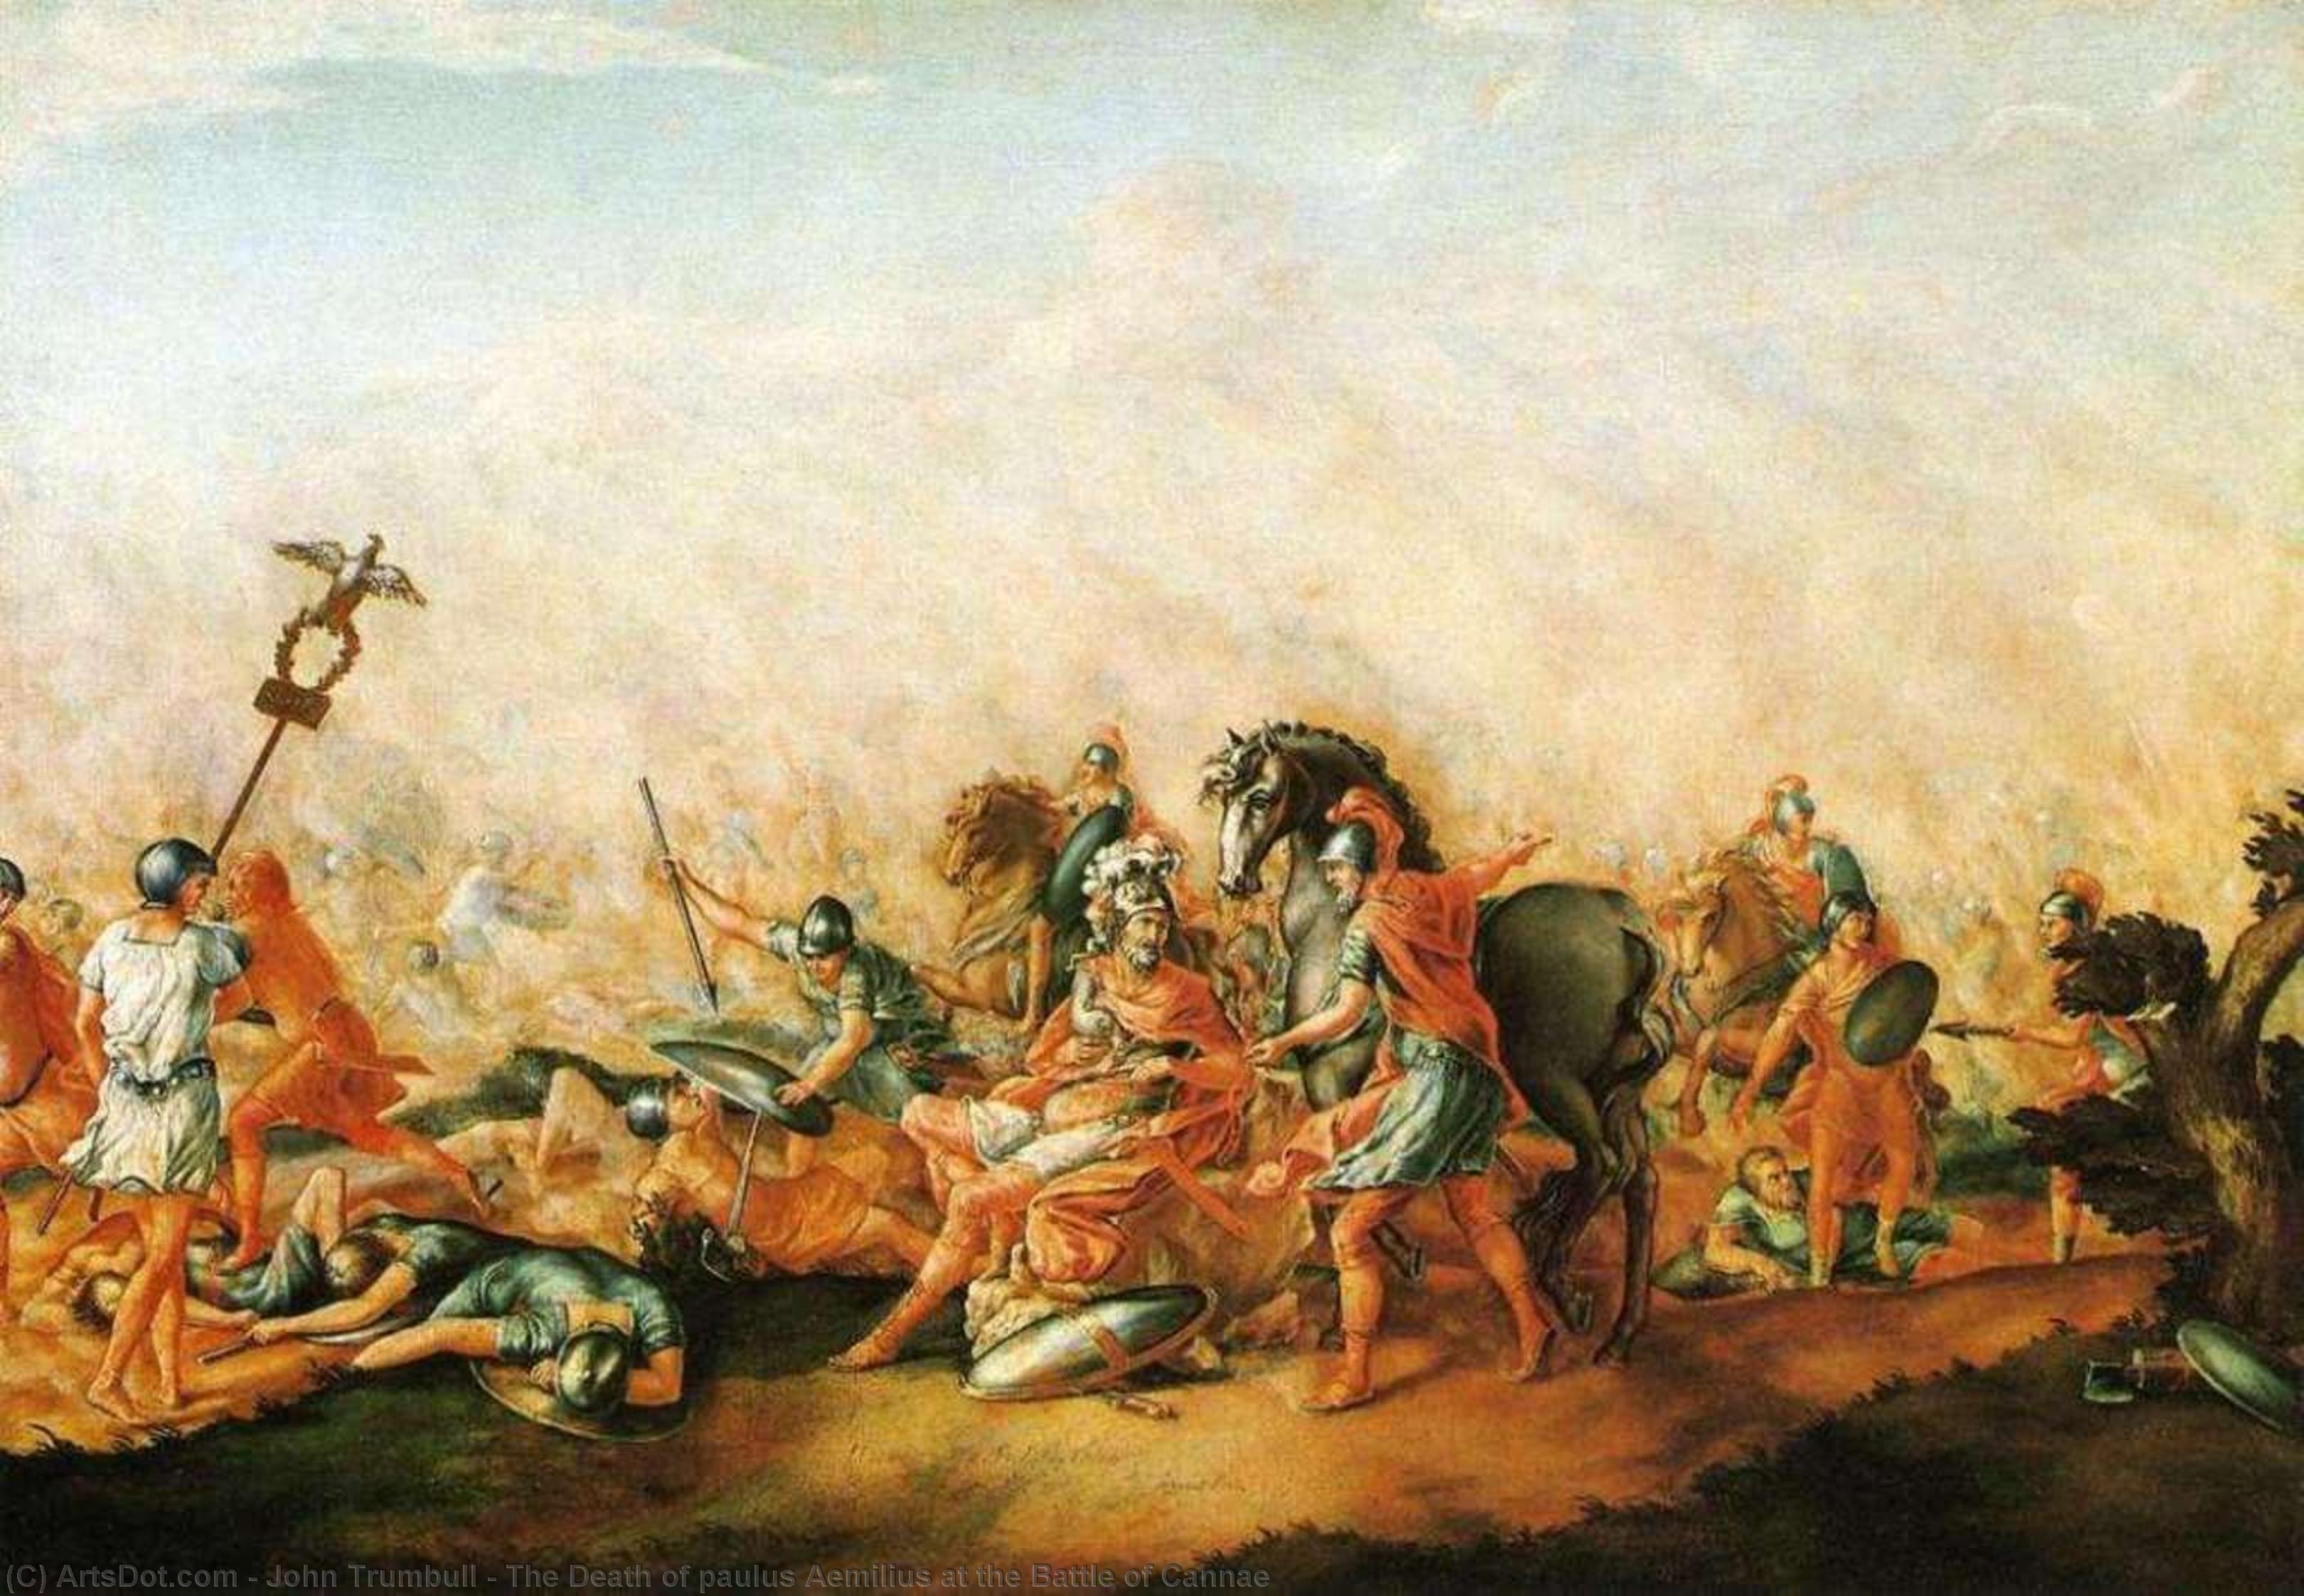 WikiOO.org - Encyclopedia of Fine Arts - Malba, Artwork John Trumbull - The Death of paulus Aemilius at the Battle of Cannae